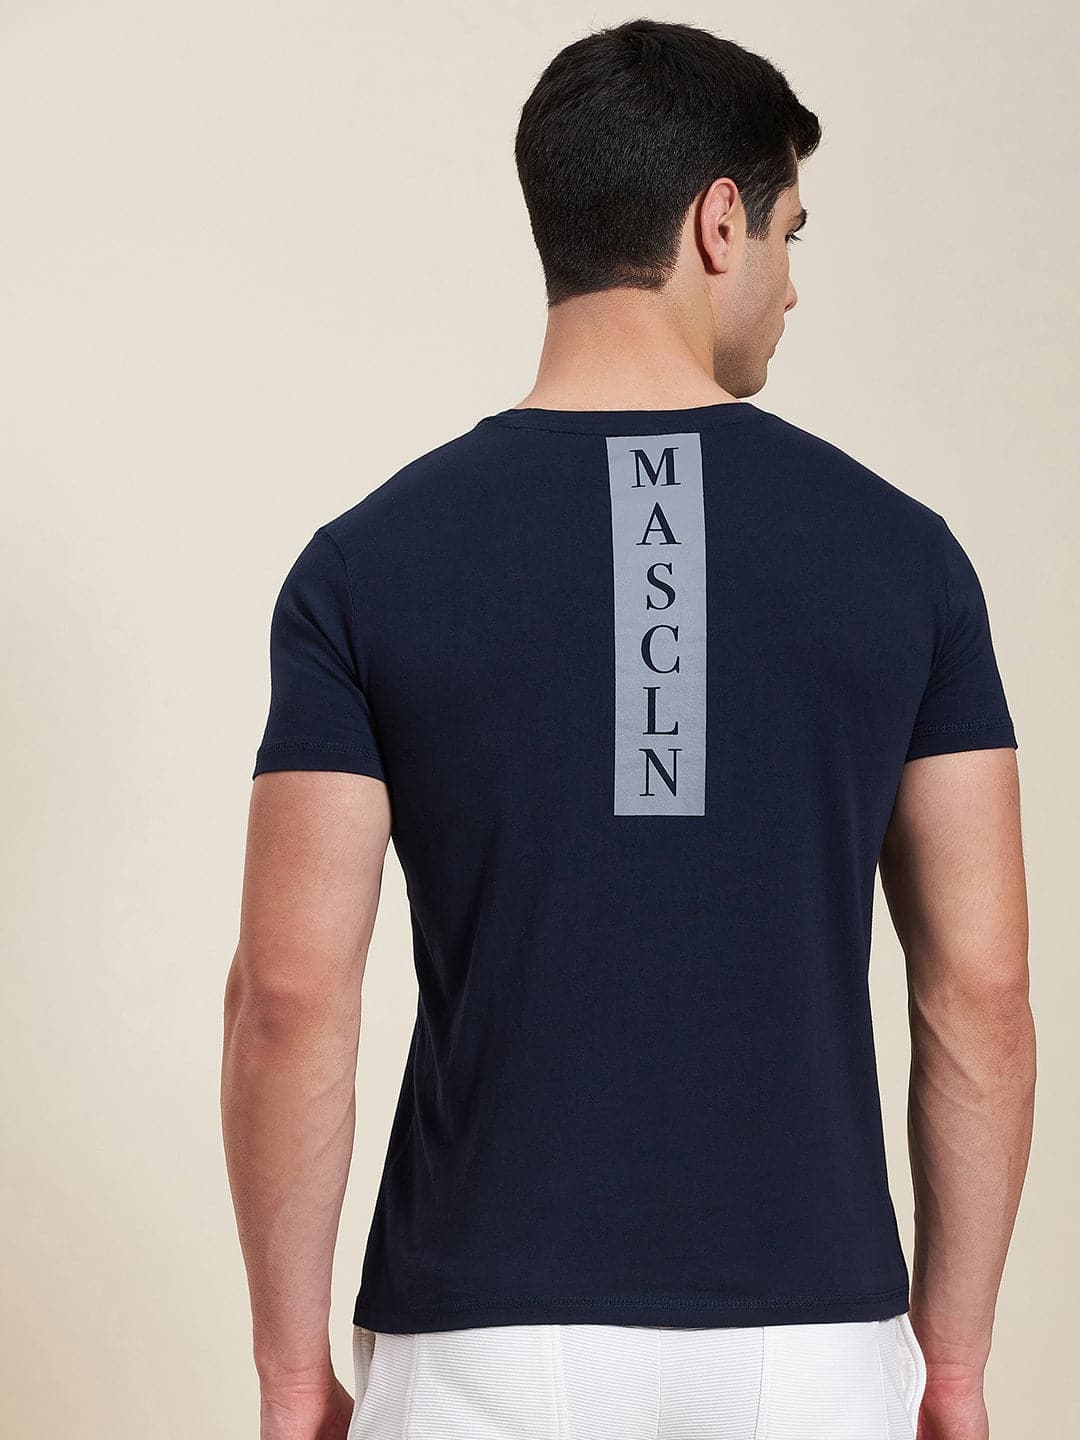 Men's Navy Slim Fit Back Printed MASCLN Logo T-Shirt - LYUSH-MASCLN